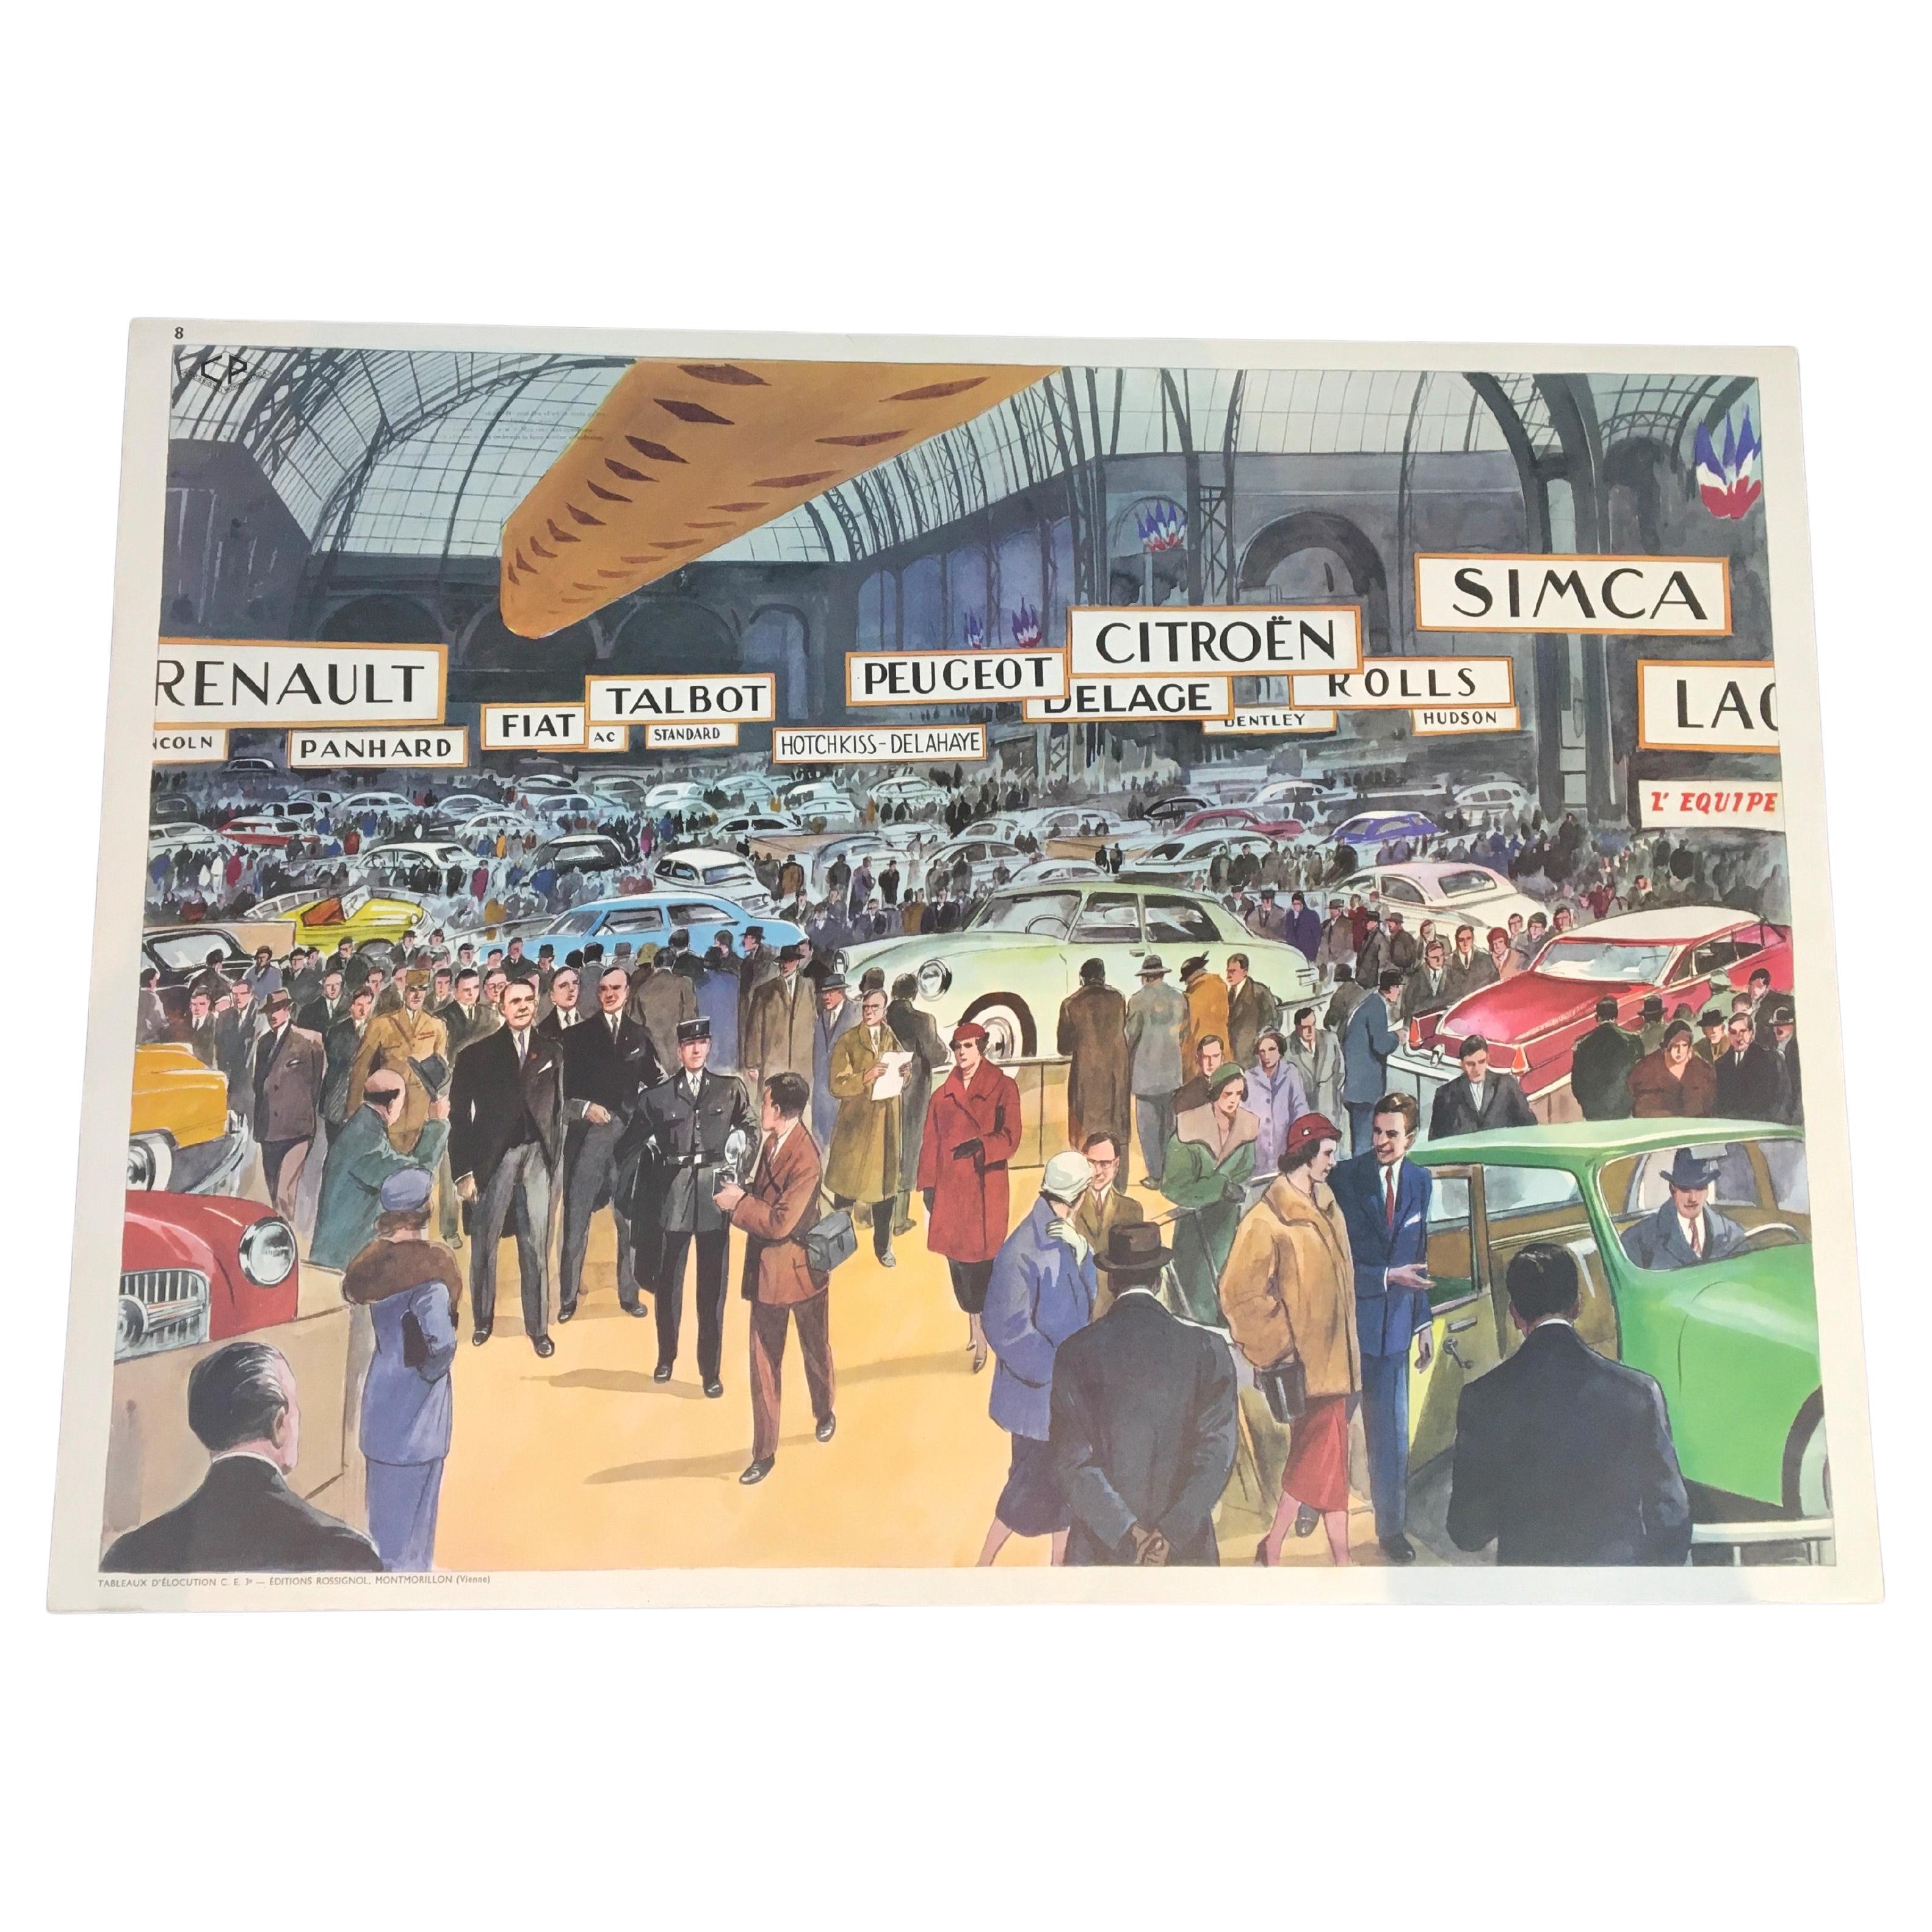 Paris Motor Show, Grand Palais Paris, Poster, School Chart by Rossignol, France